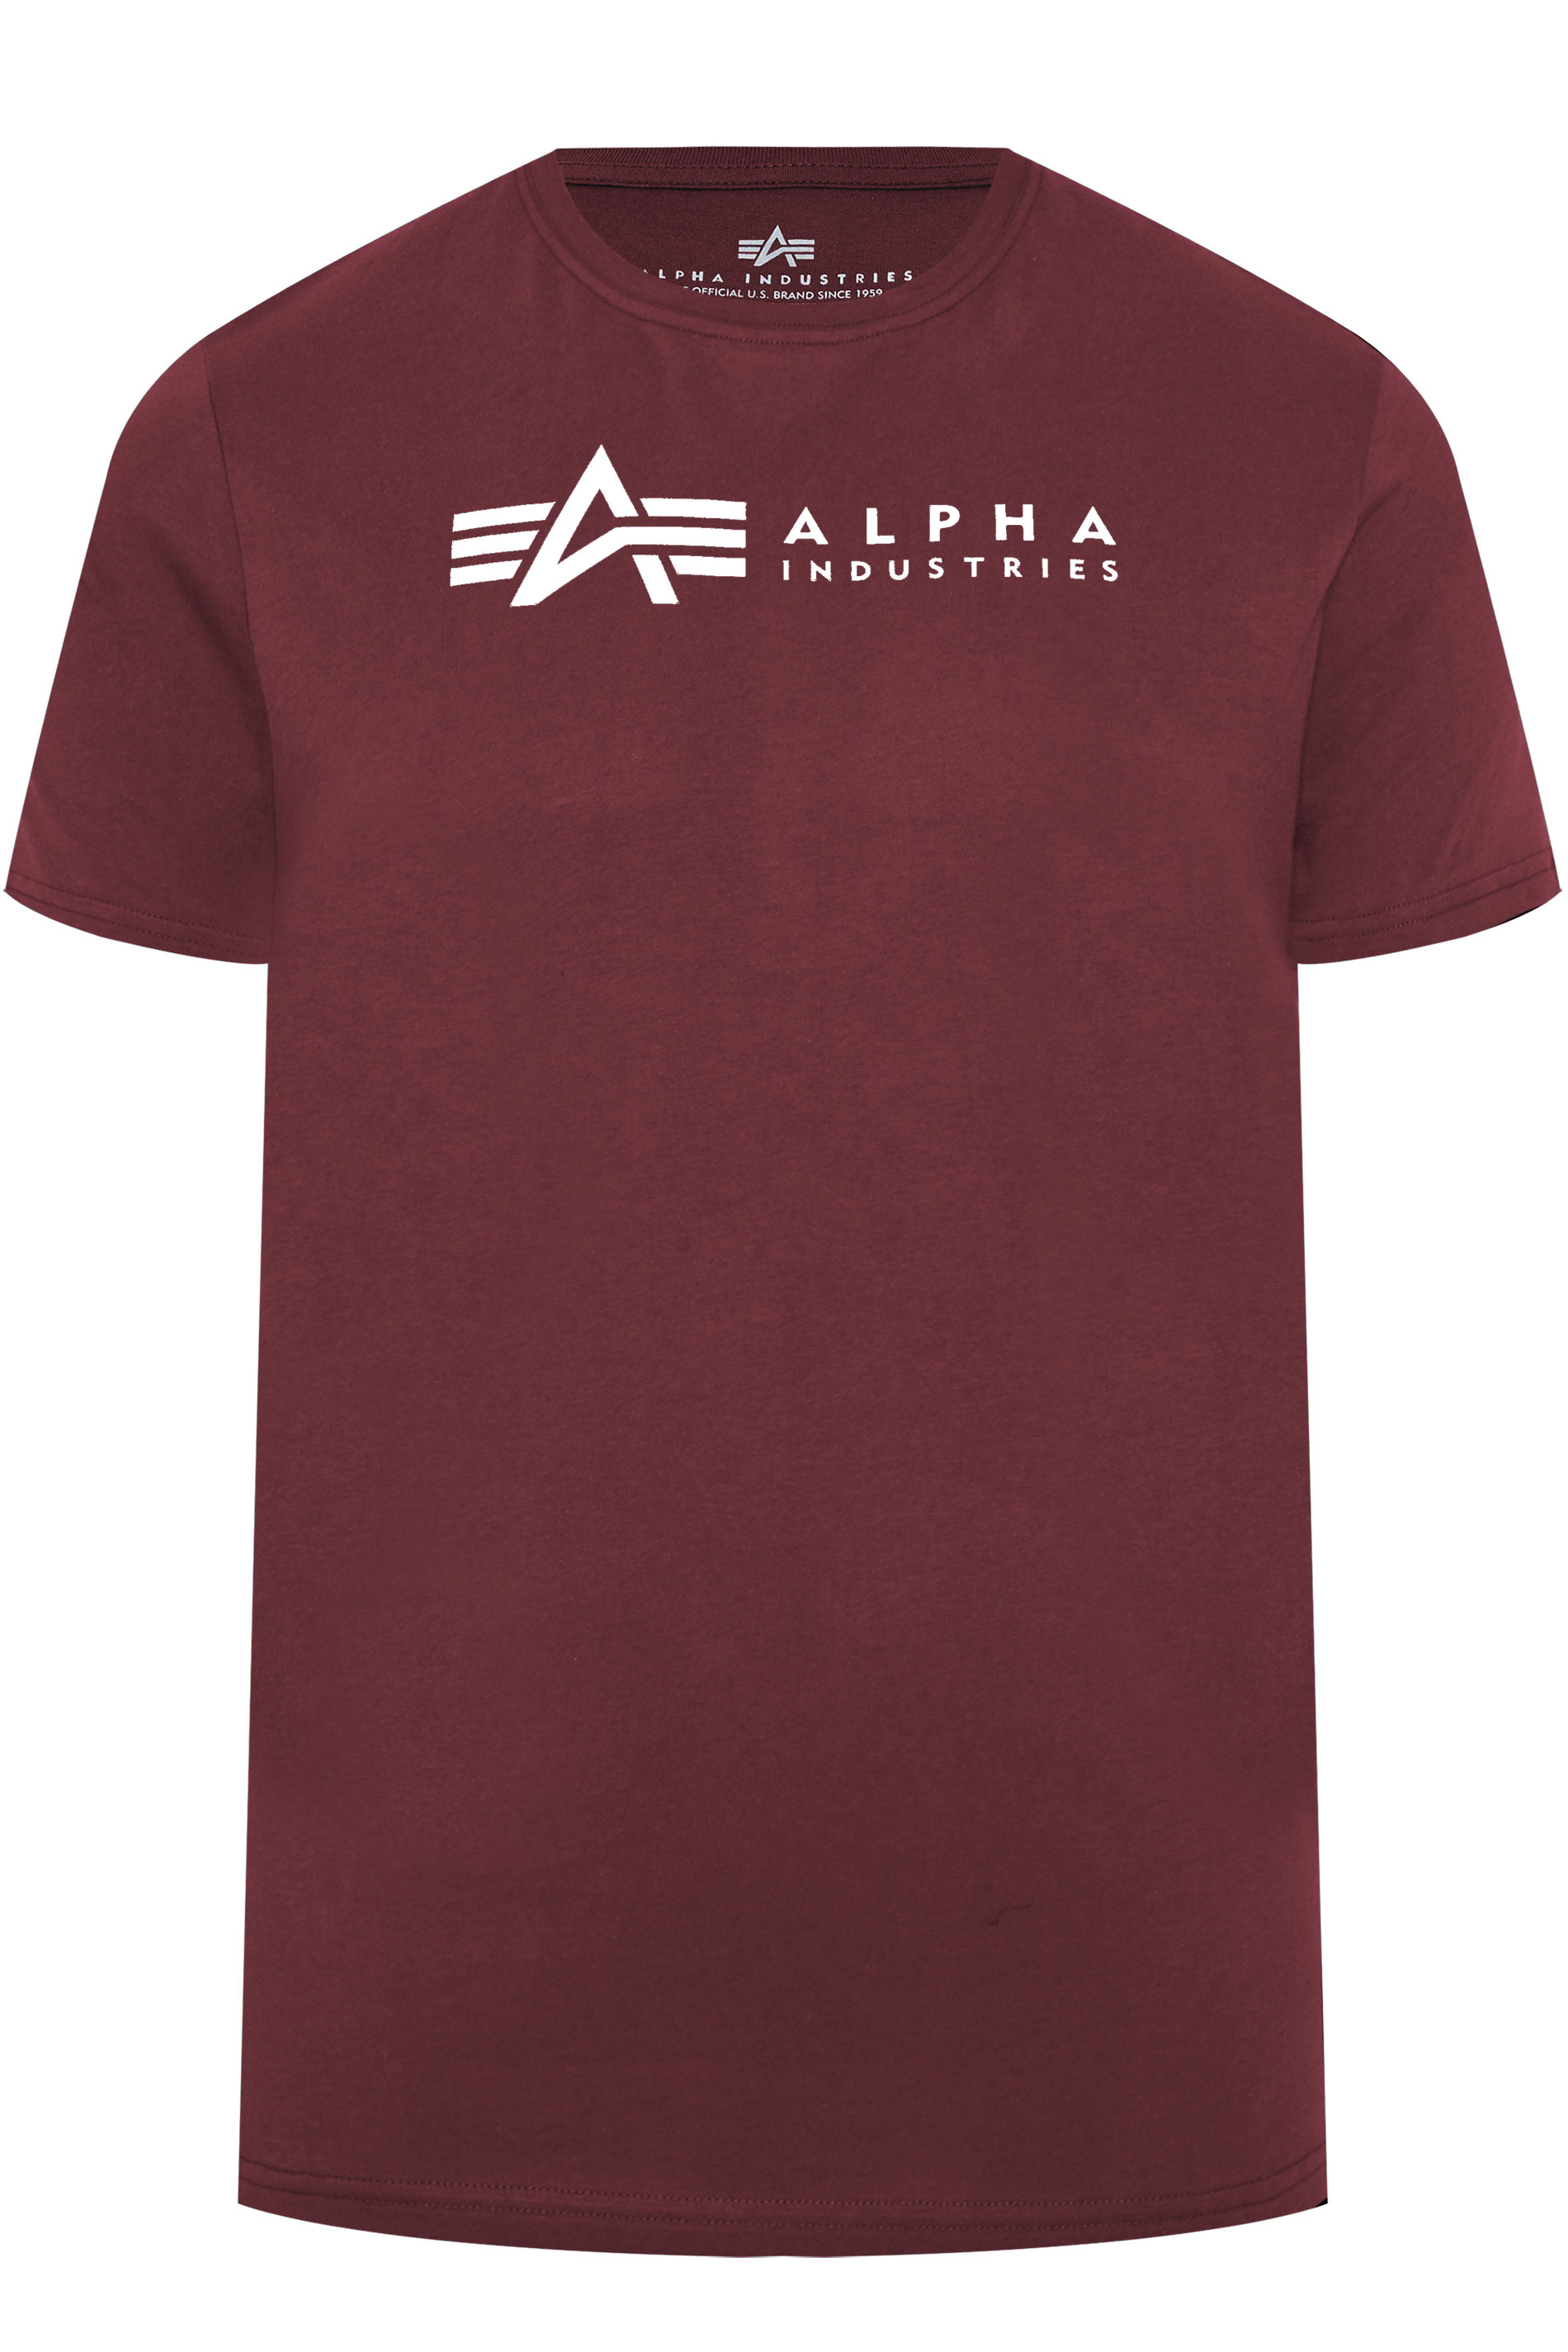 T-Shirts Burgundy BadRhino | 2 INDUSTRIES Red Logo ALPHA Pack